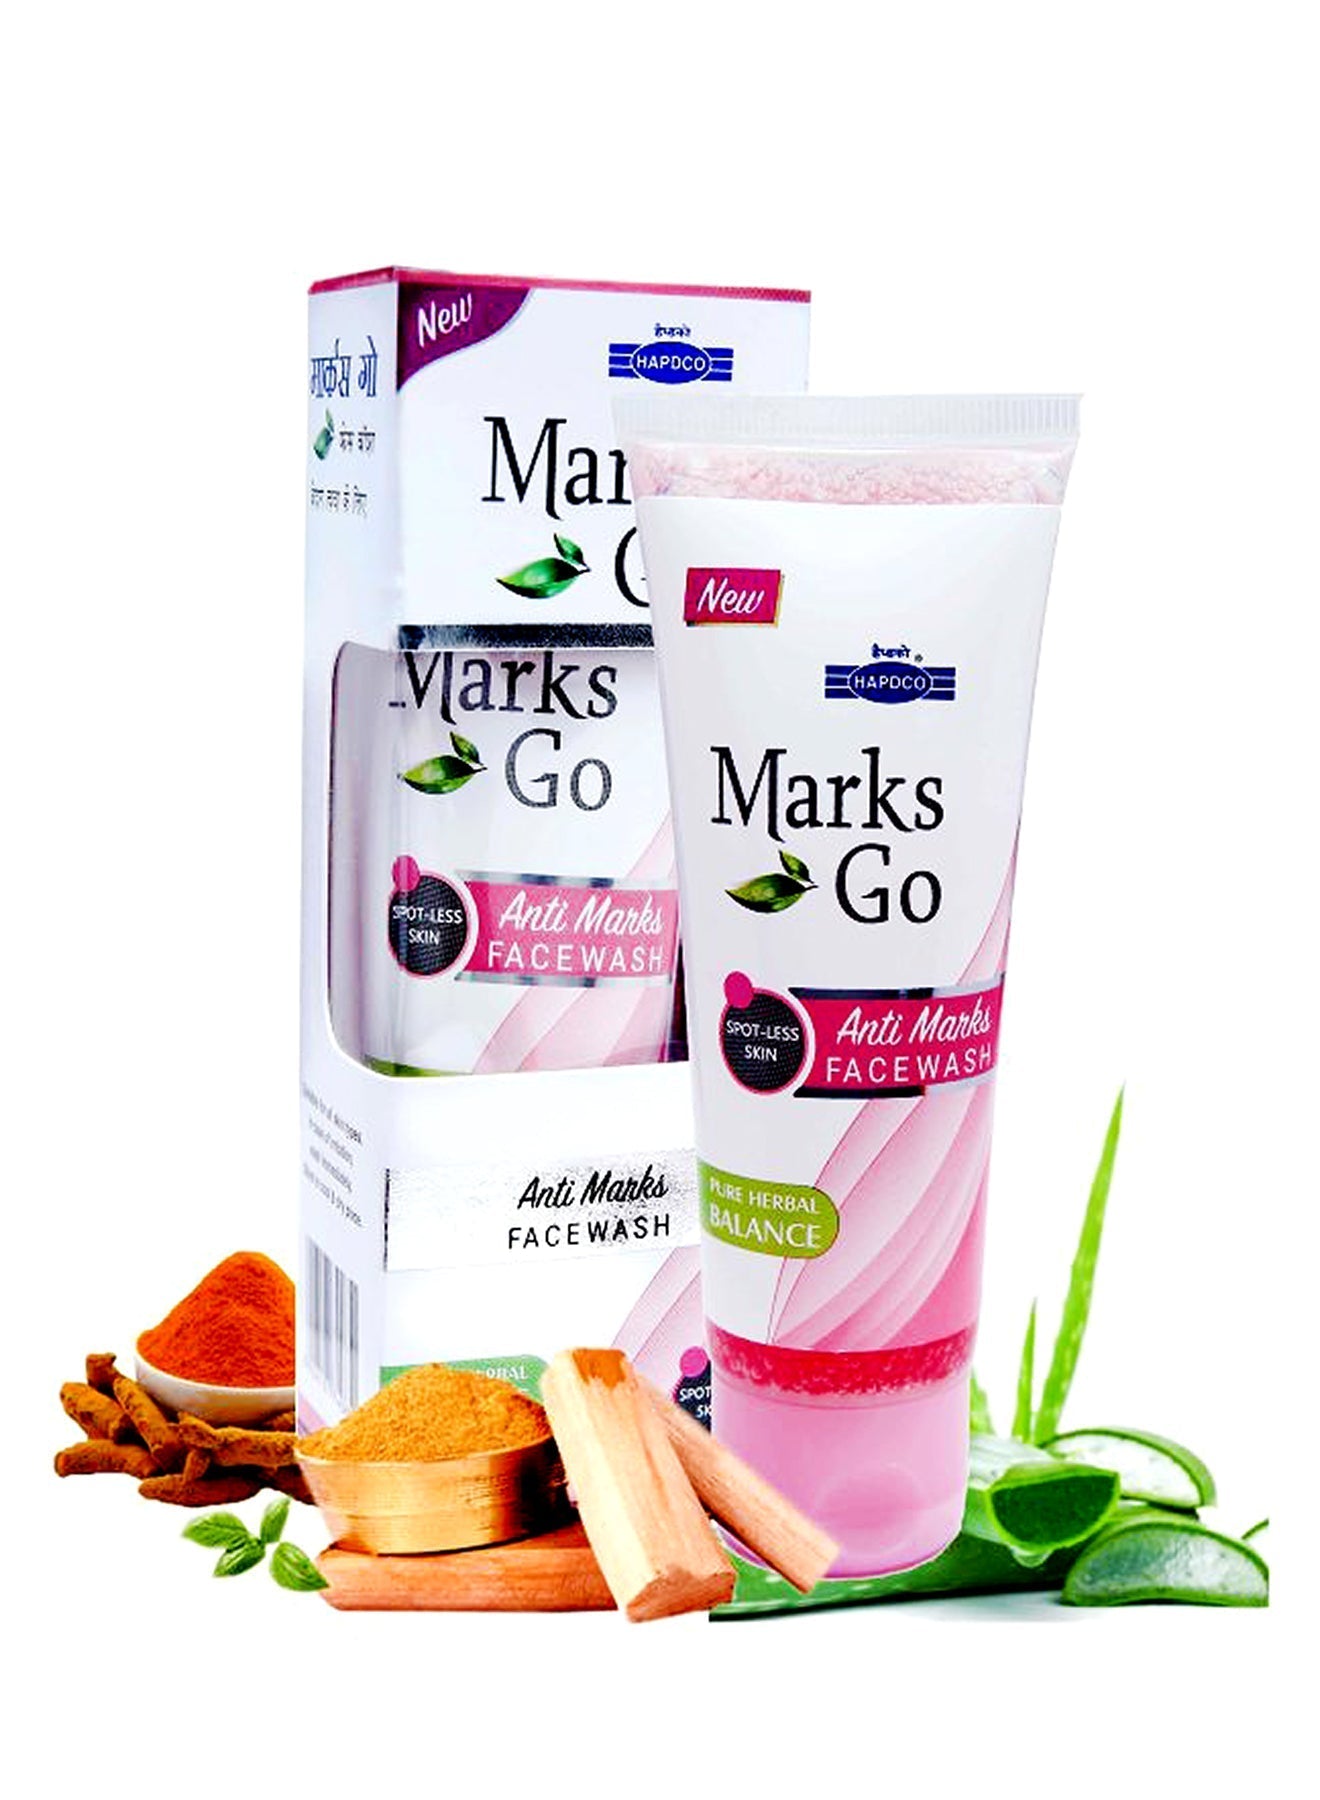 Anti Marks Facewash 65ml Value Pack of 2 